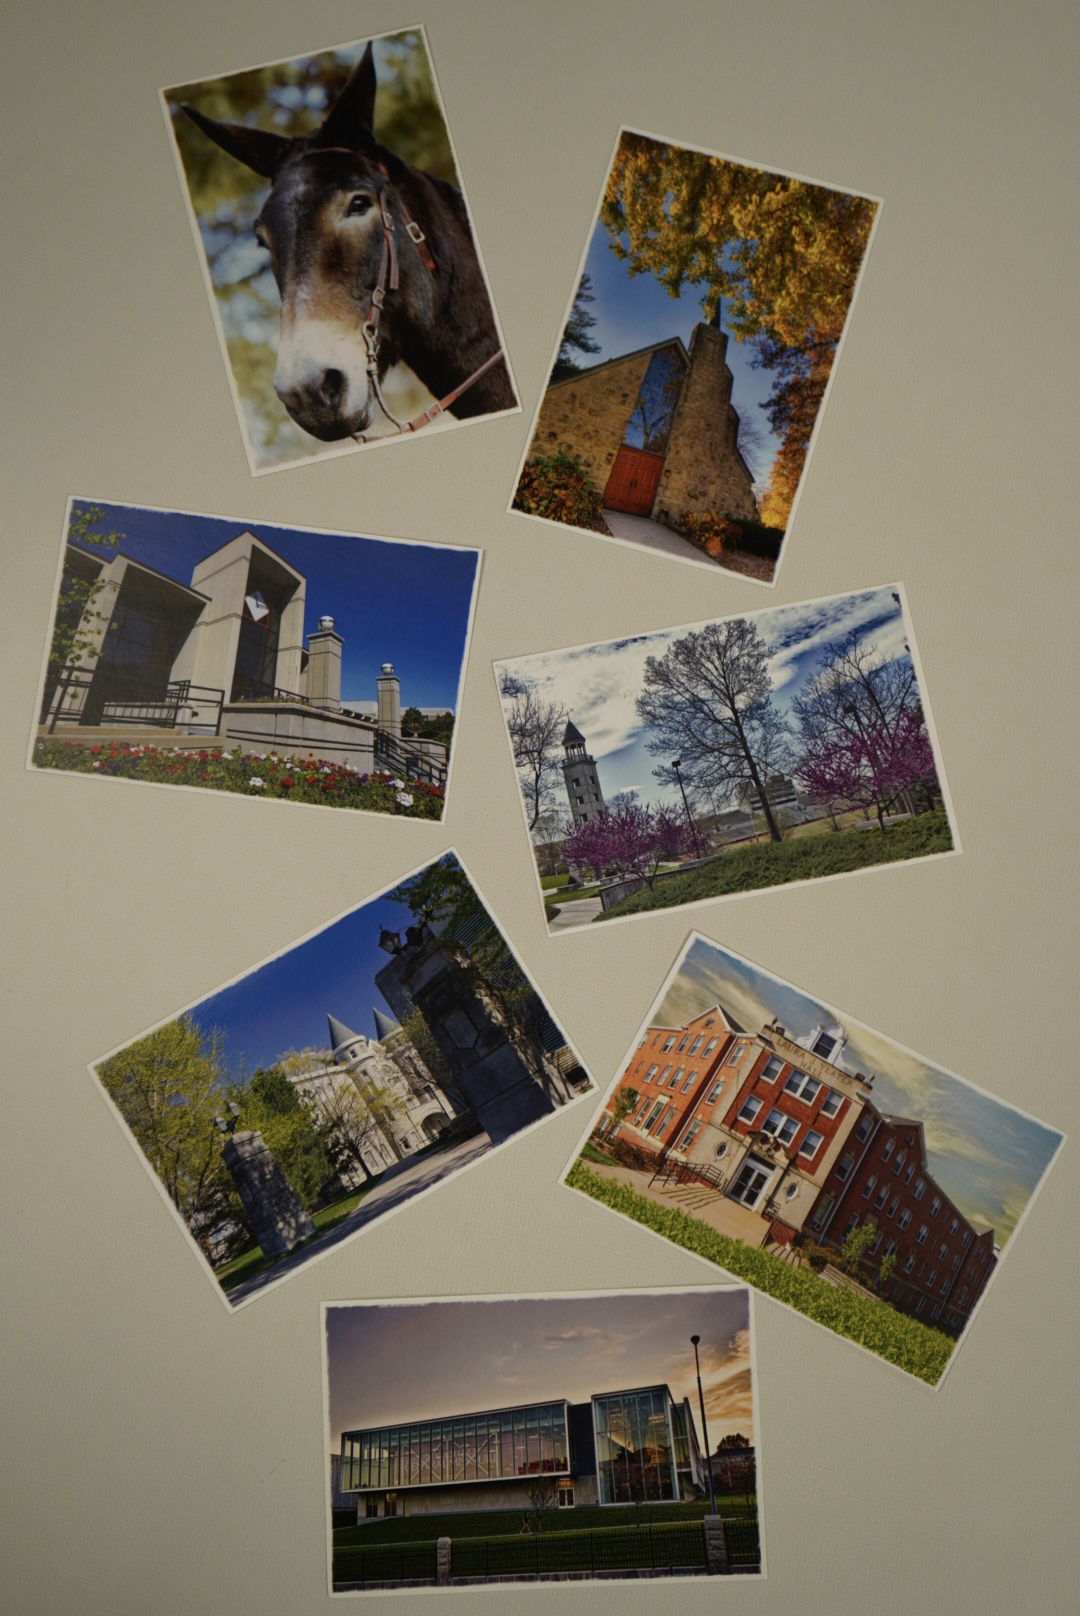 postcards of landmarks around the UCM campus